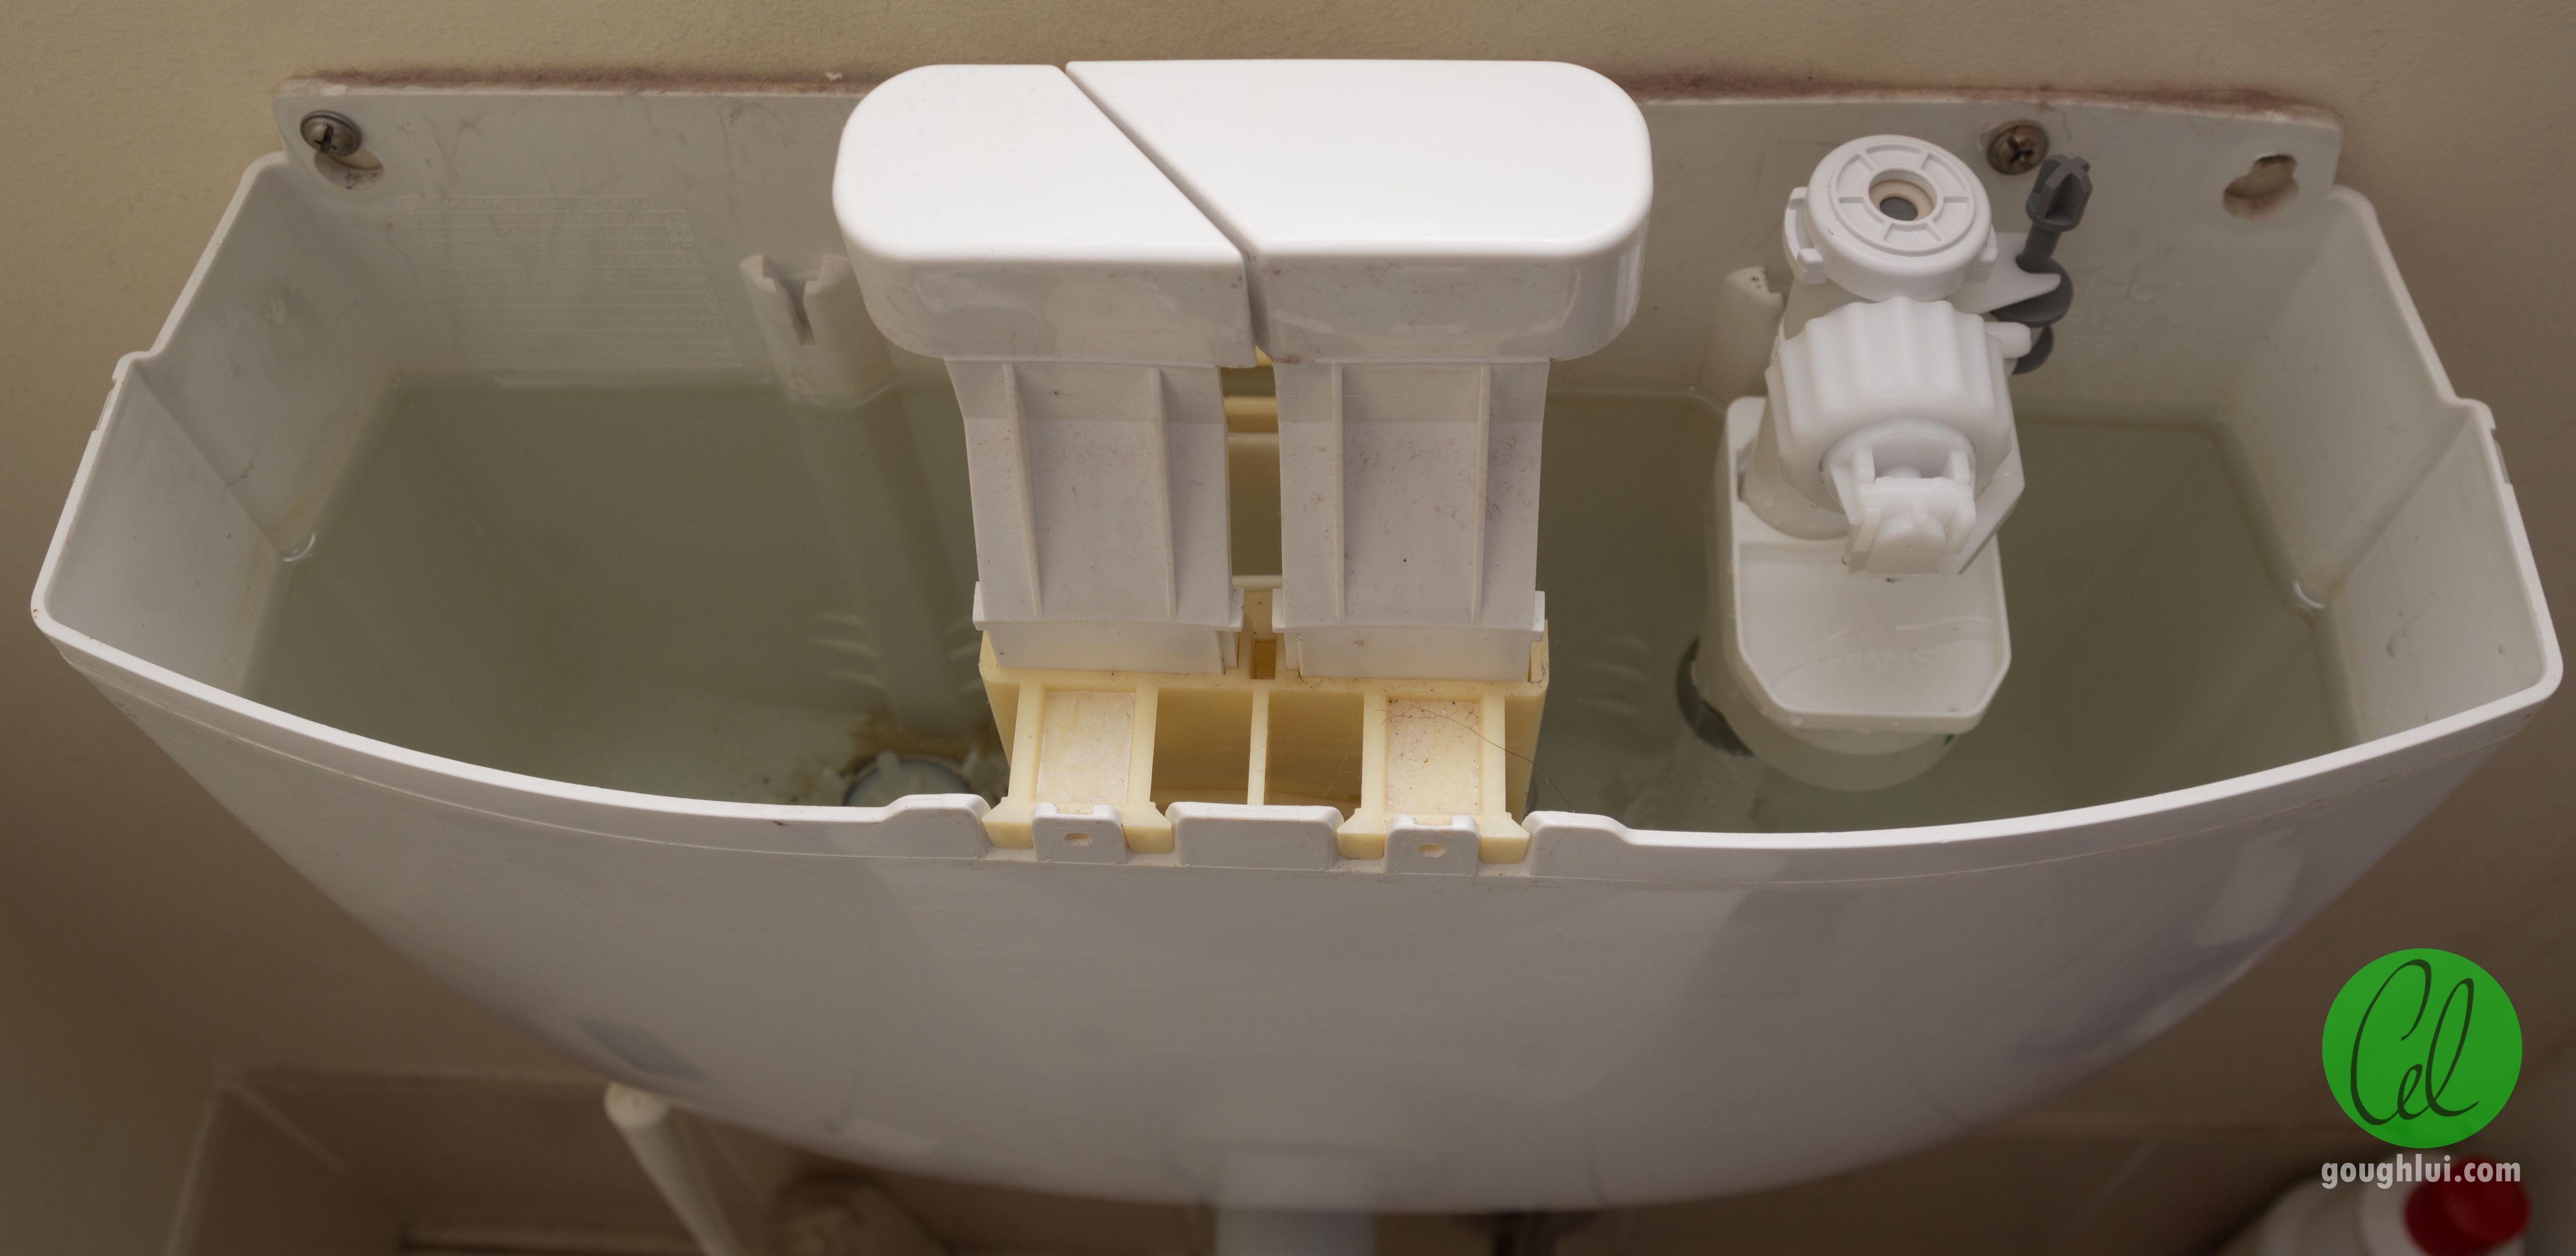 Caroma toilet Parts Diagram Project Caroma Slimline Dual Flush Cistern Inlet Valve Replacement Of Caroma toilet Parts Diagram